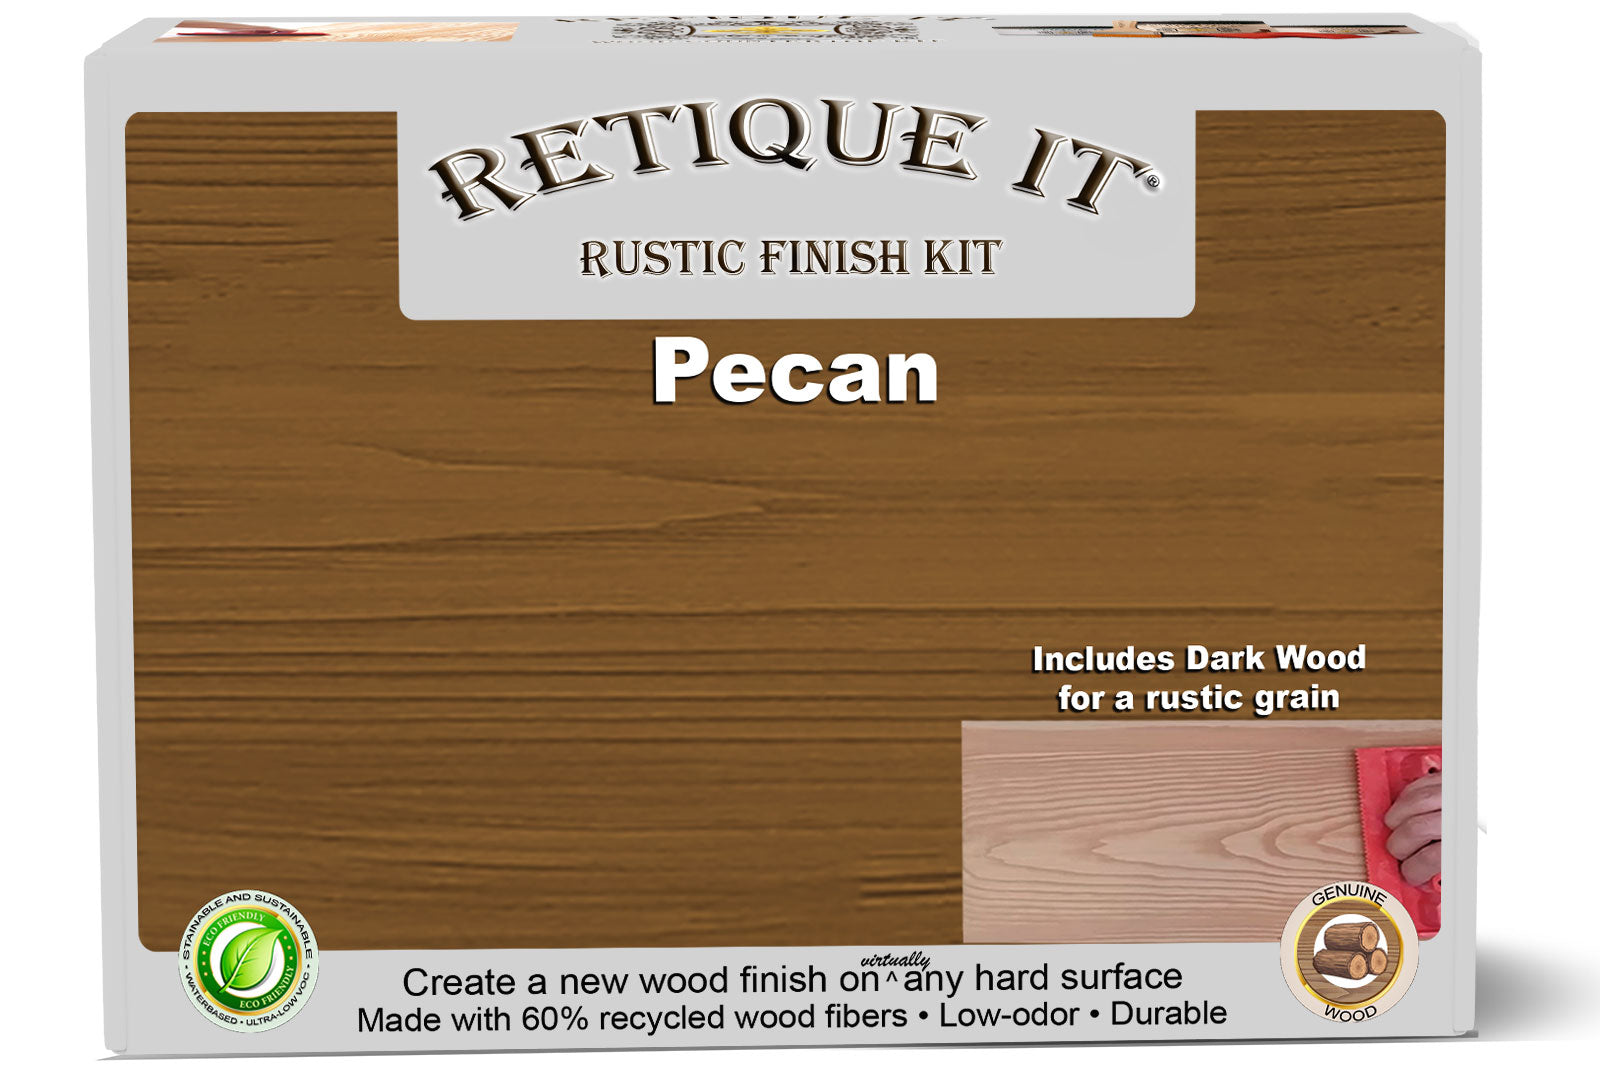 Rustic Finish Kit - Pecan